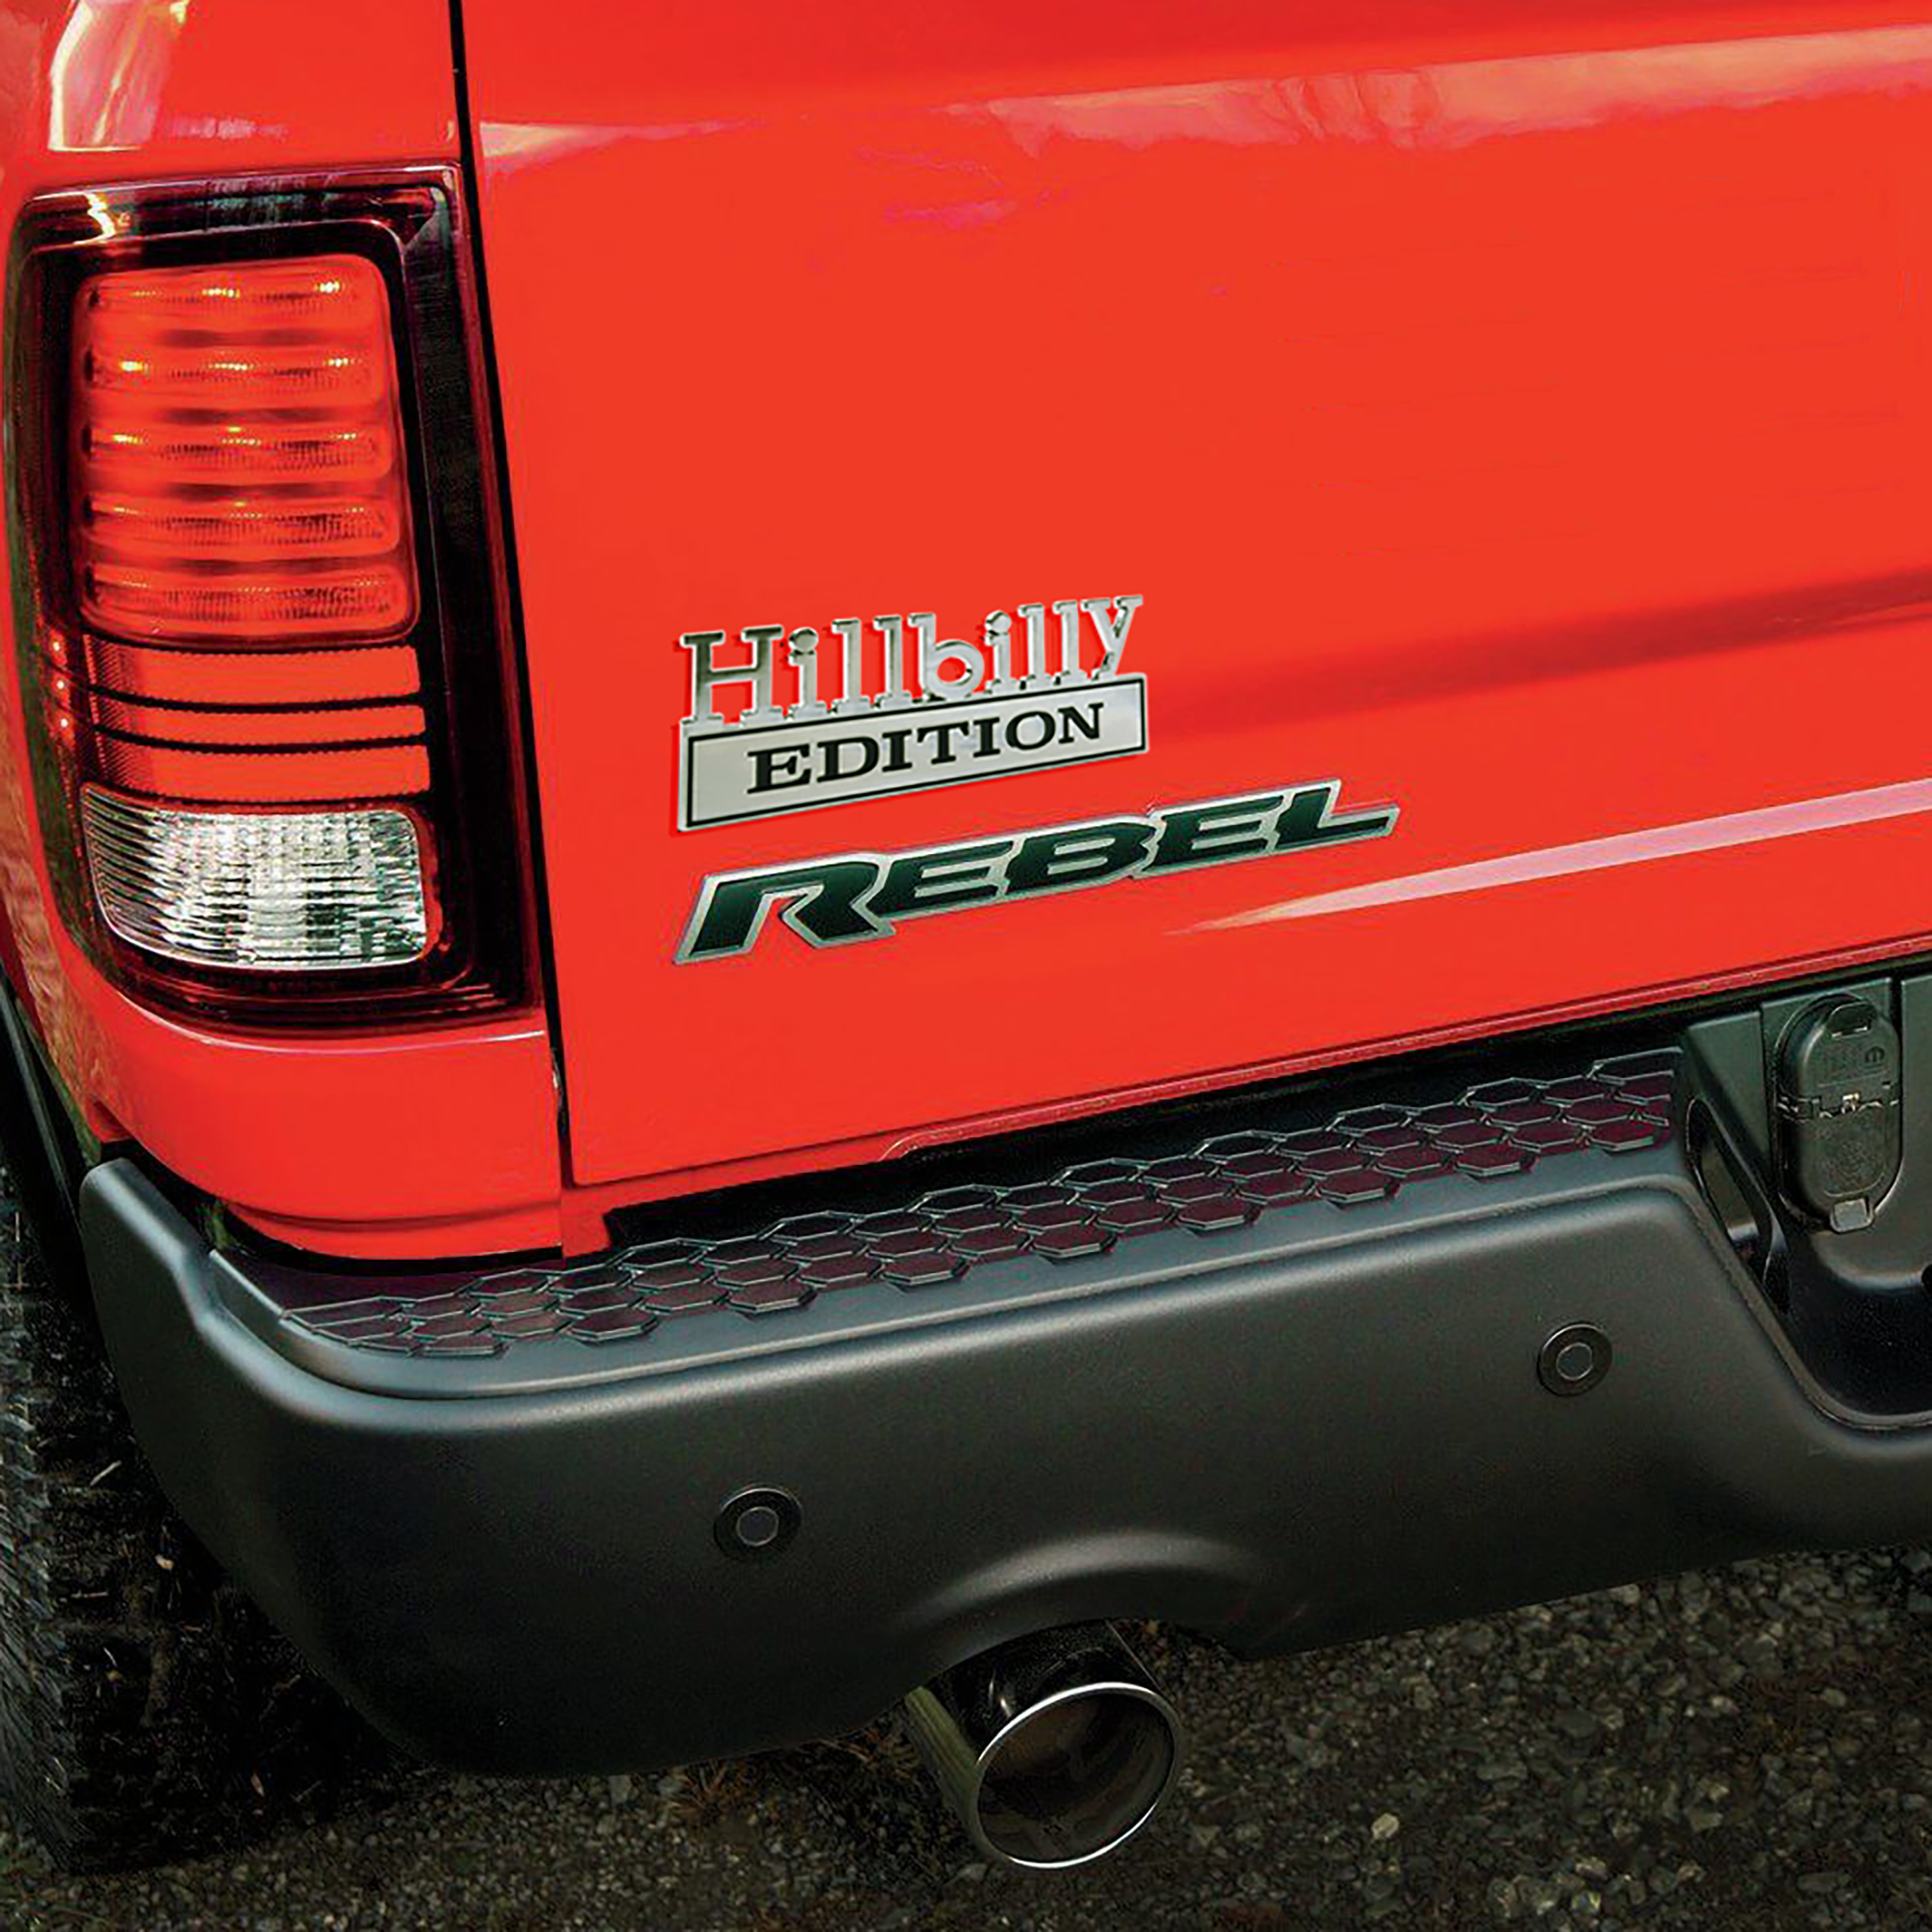 Hillbilly Edition Metal Emblem Installed on Rear Tailgate